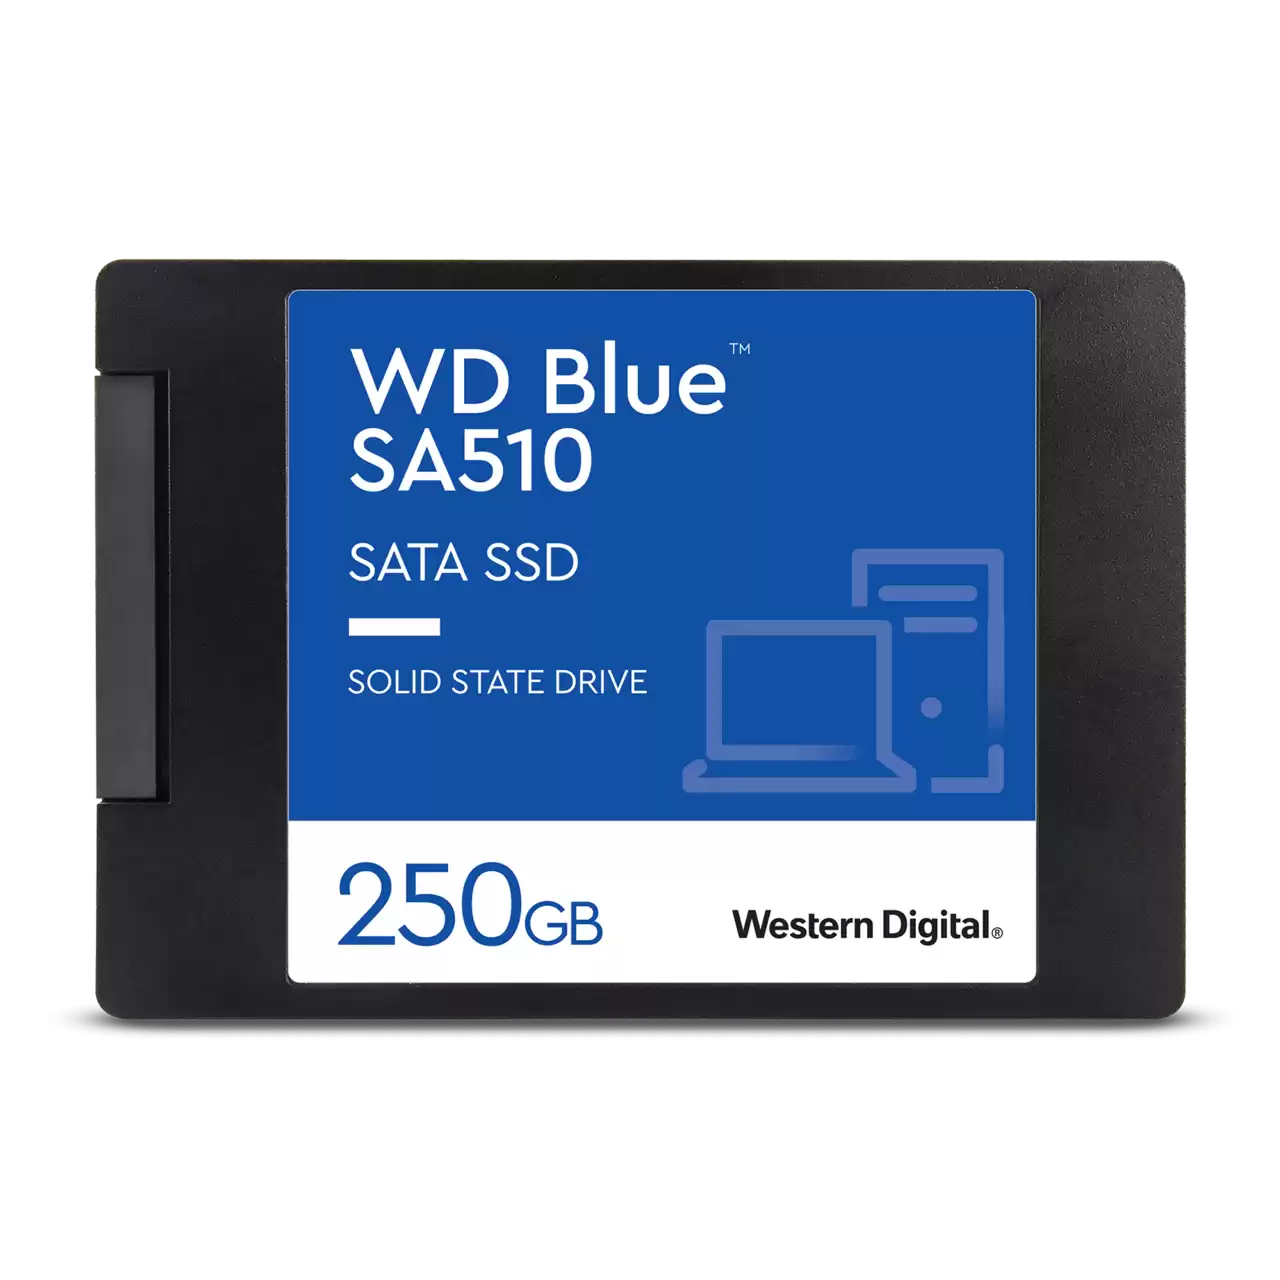 WD Blue SA510 SATA SSD 250GB 2.5